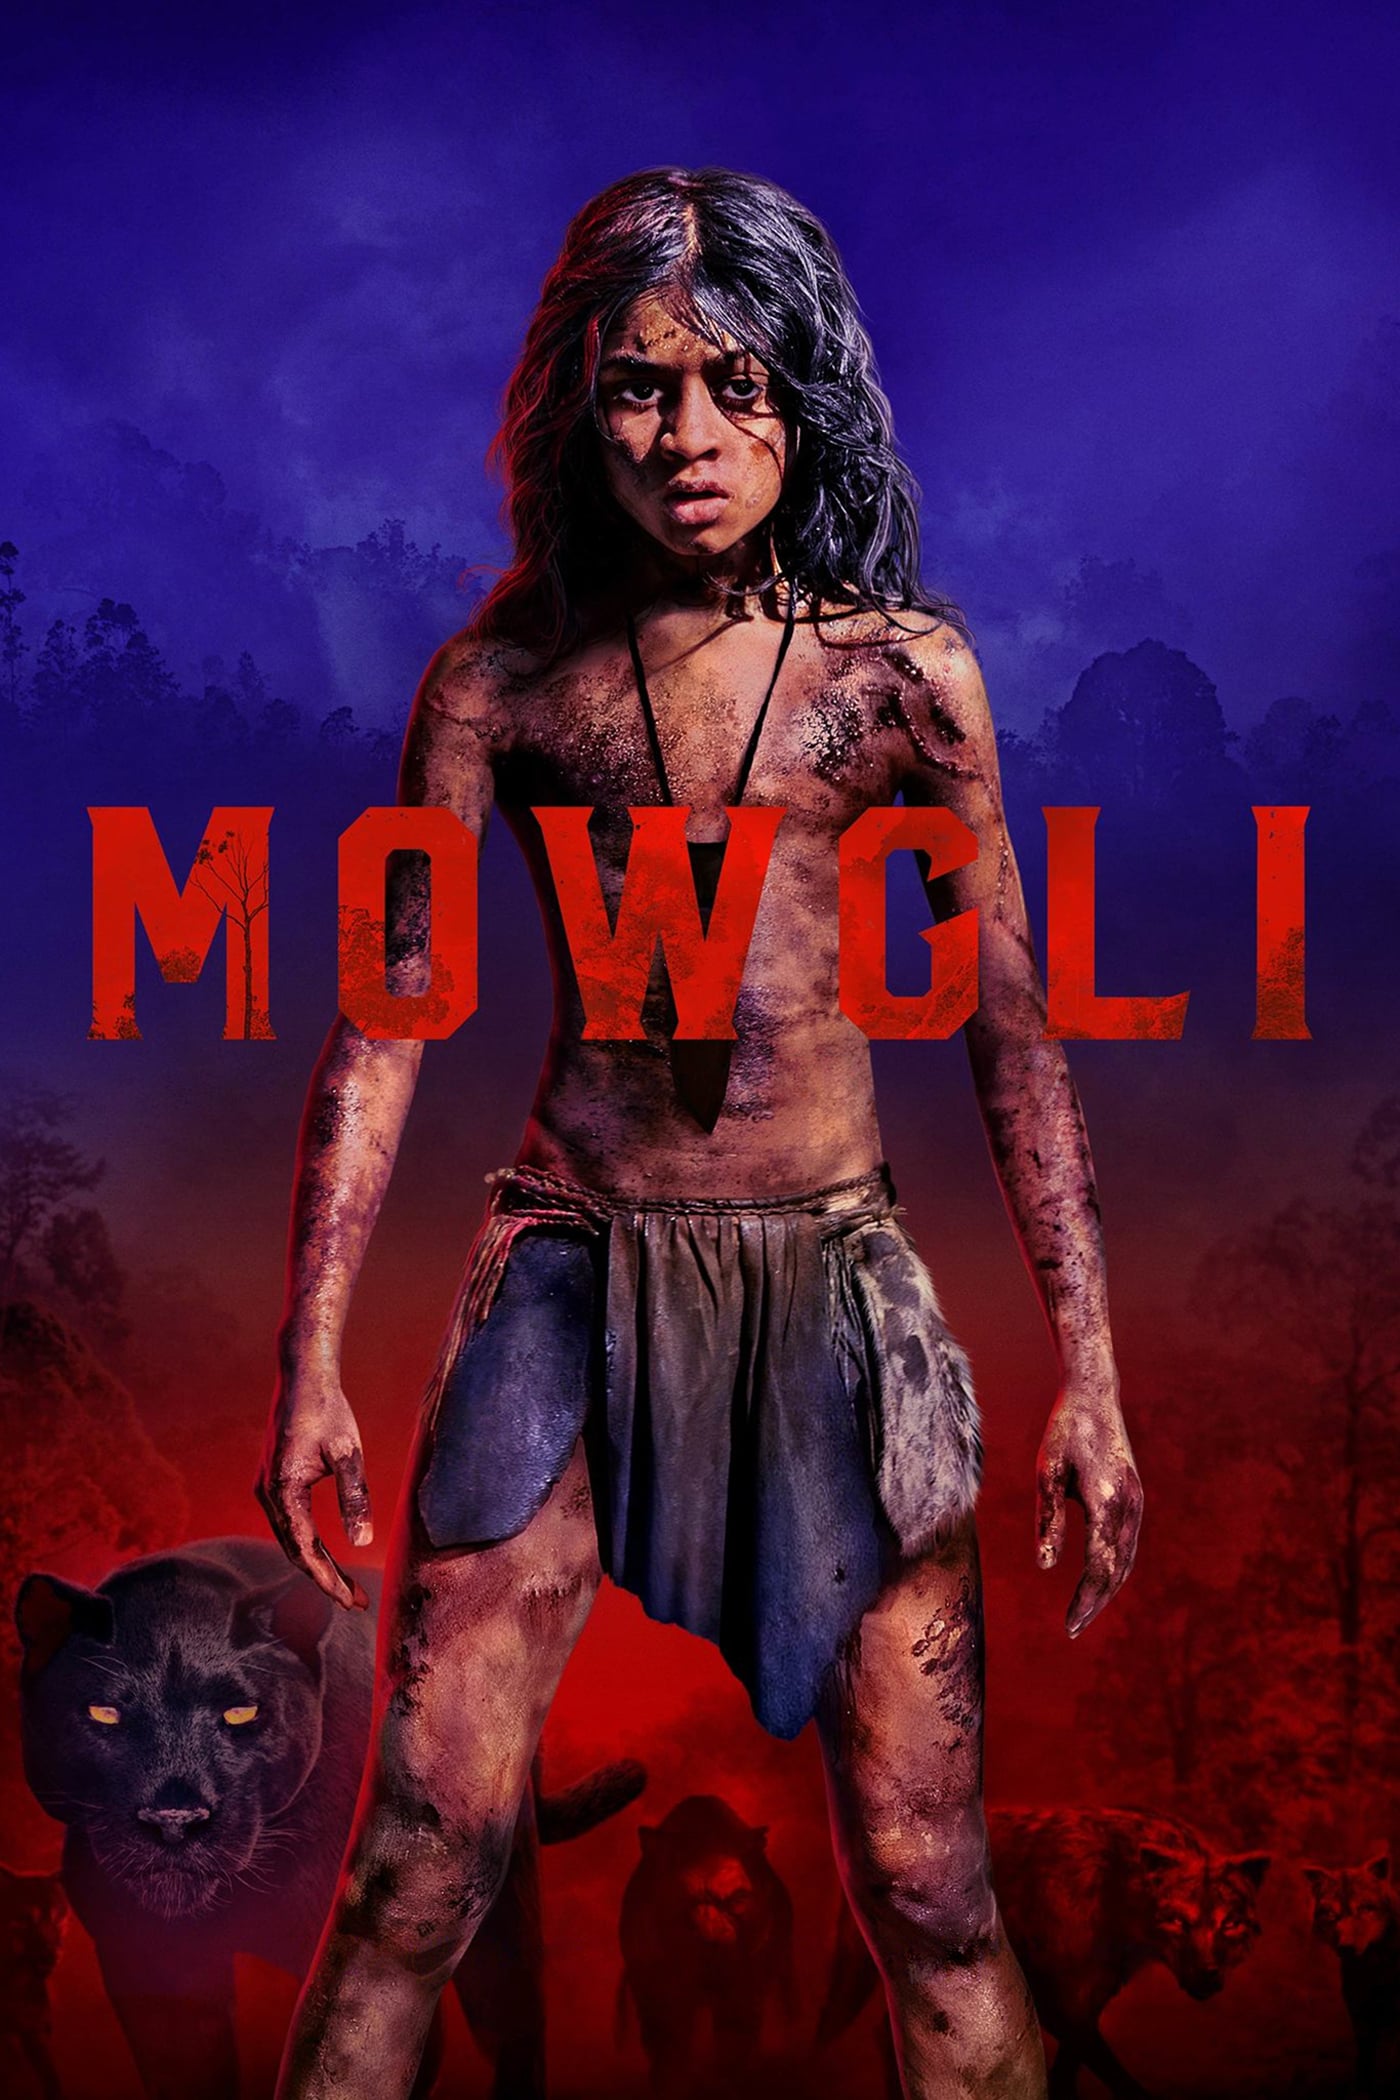 Poster for the movie "Mowgli"